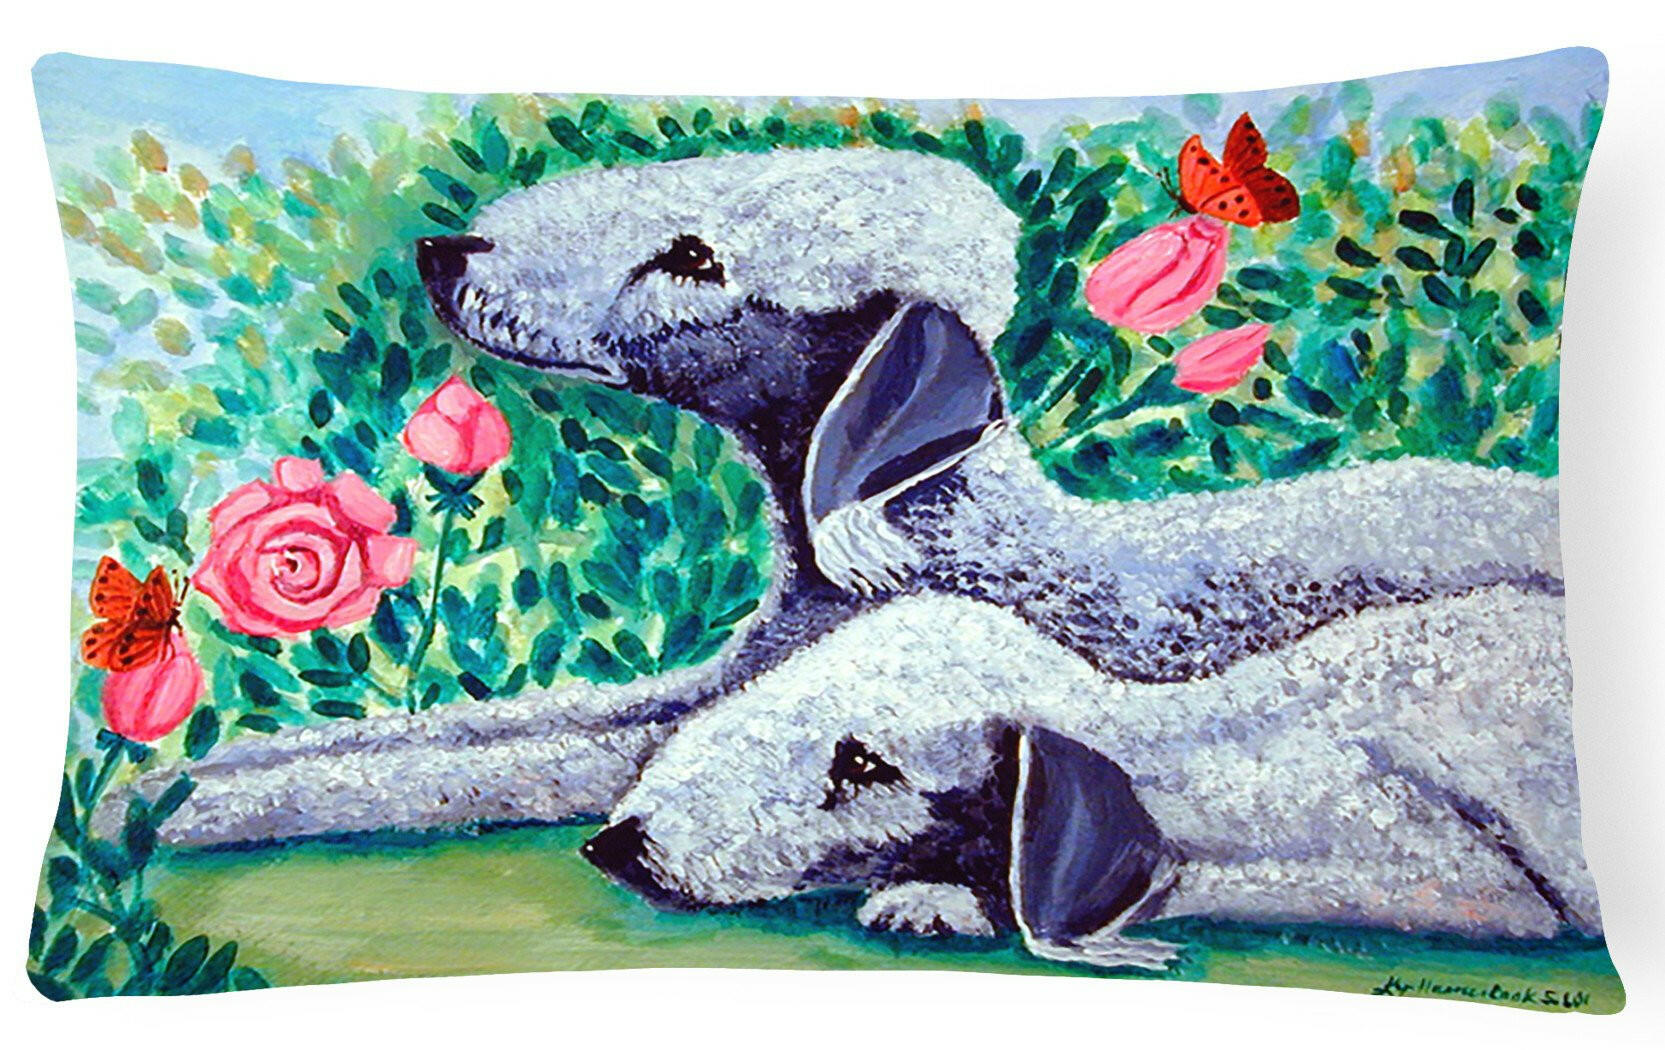 Bedlington Terrier Decorative   Canvas Fabric Pillow by Caroline's Treasures